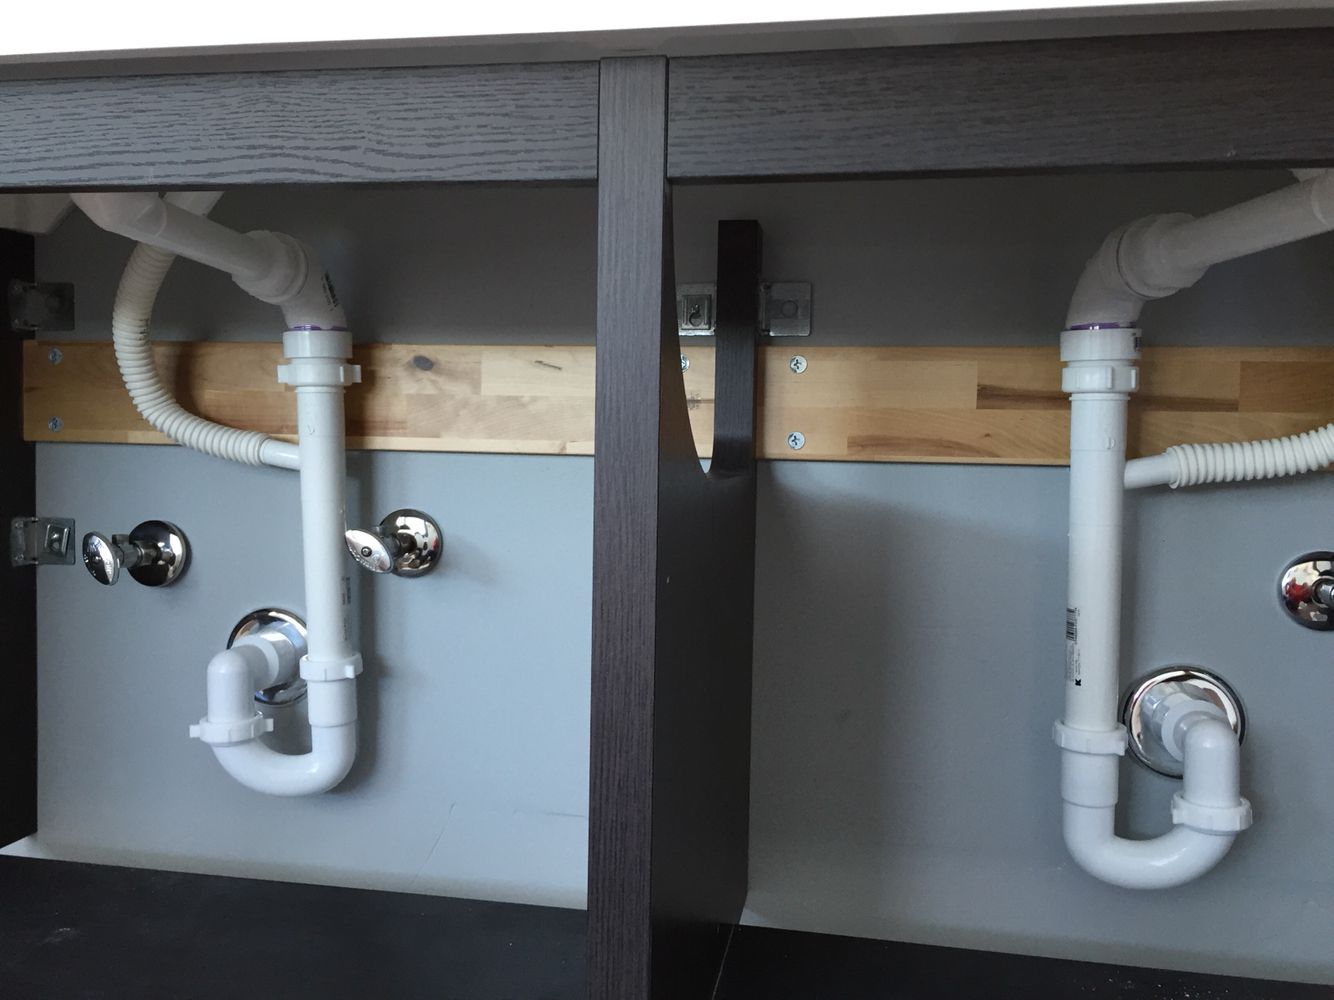 Plumbing Double Sink Bathroom Drain 1334x1000 Wallpaper Teahubio